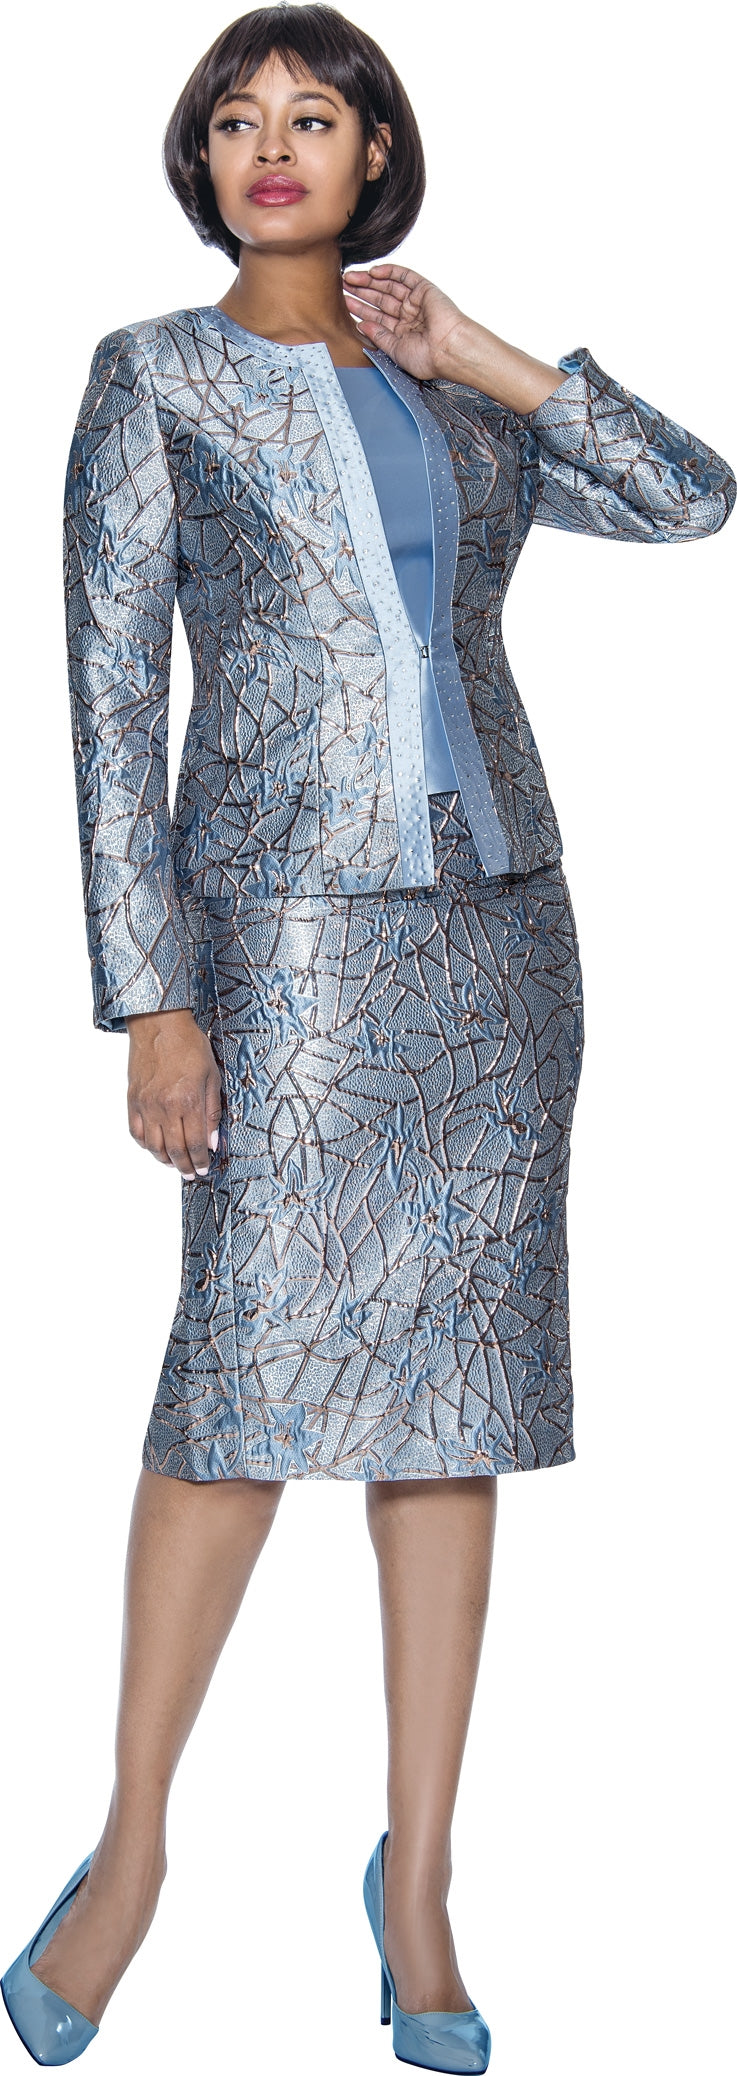 Terramina Church Suit 7028C-Blue - Church Suits For Less